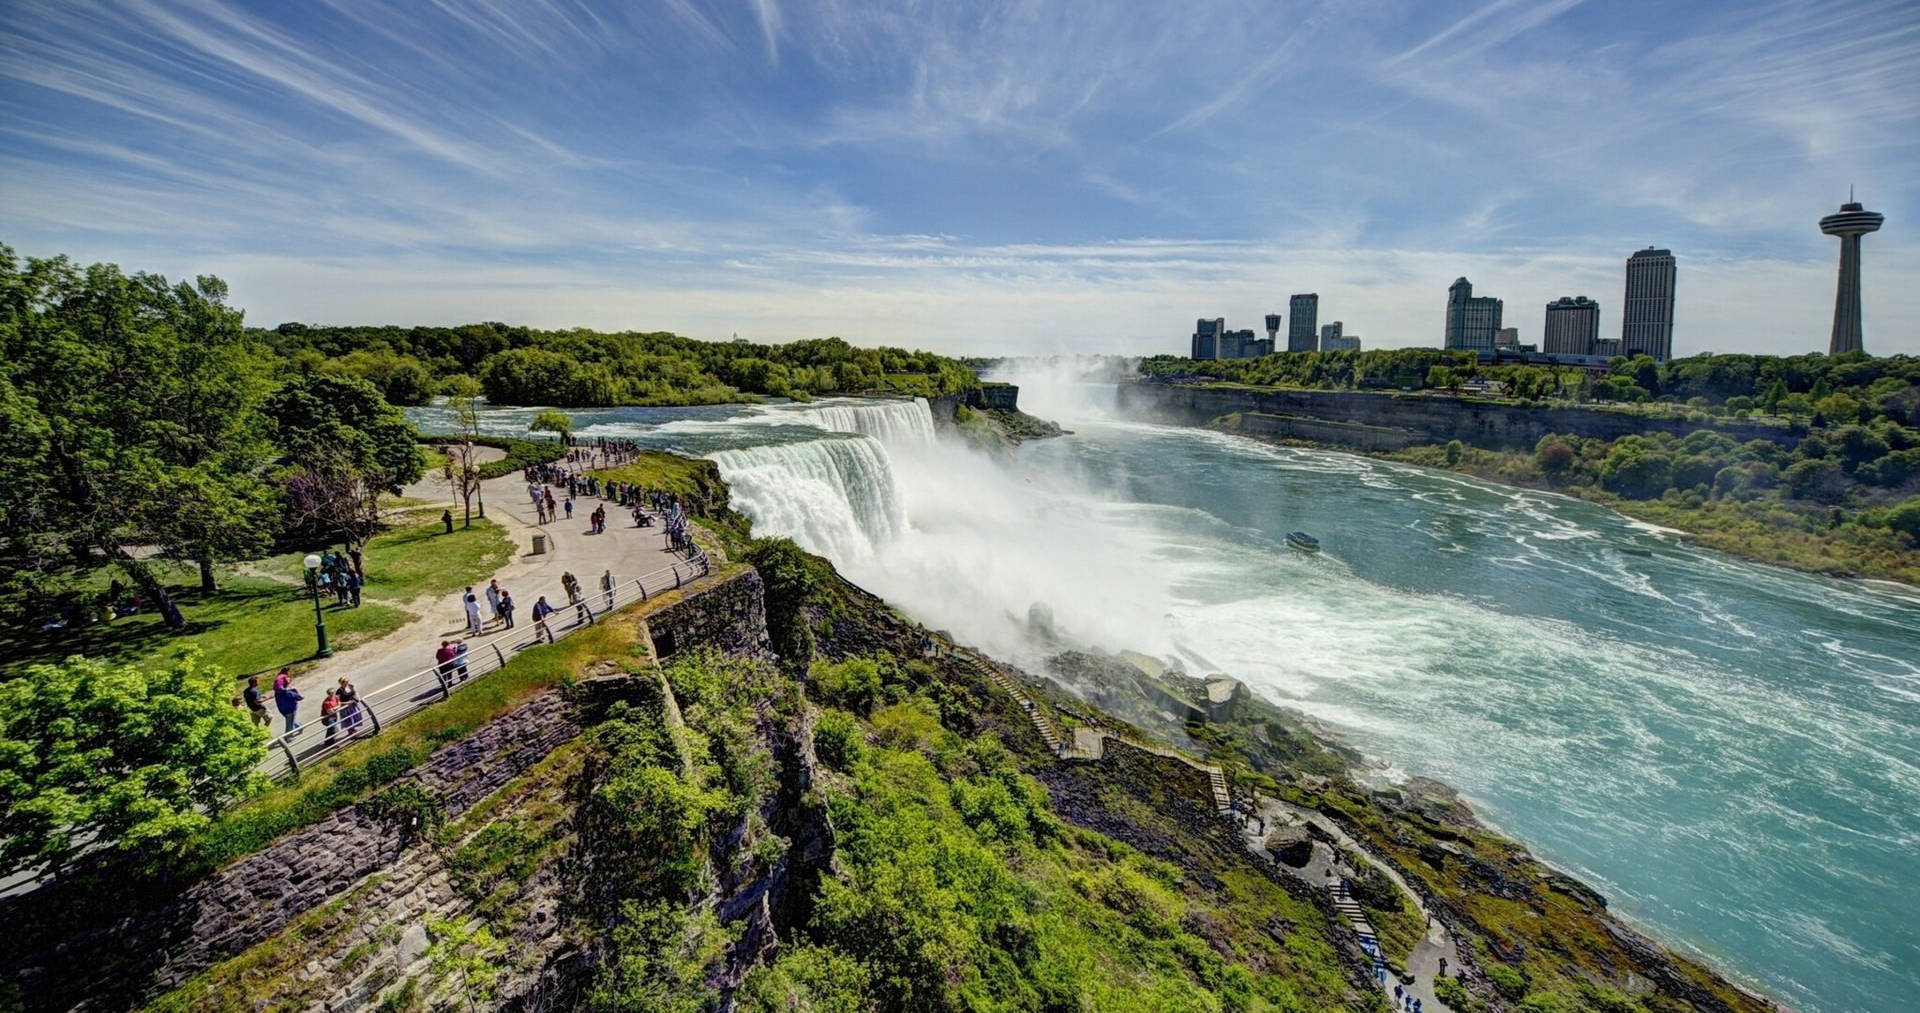 4096X2160 Niagara Falls Wallpaper and Background